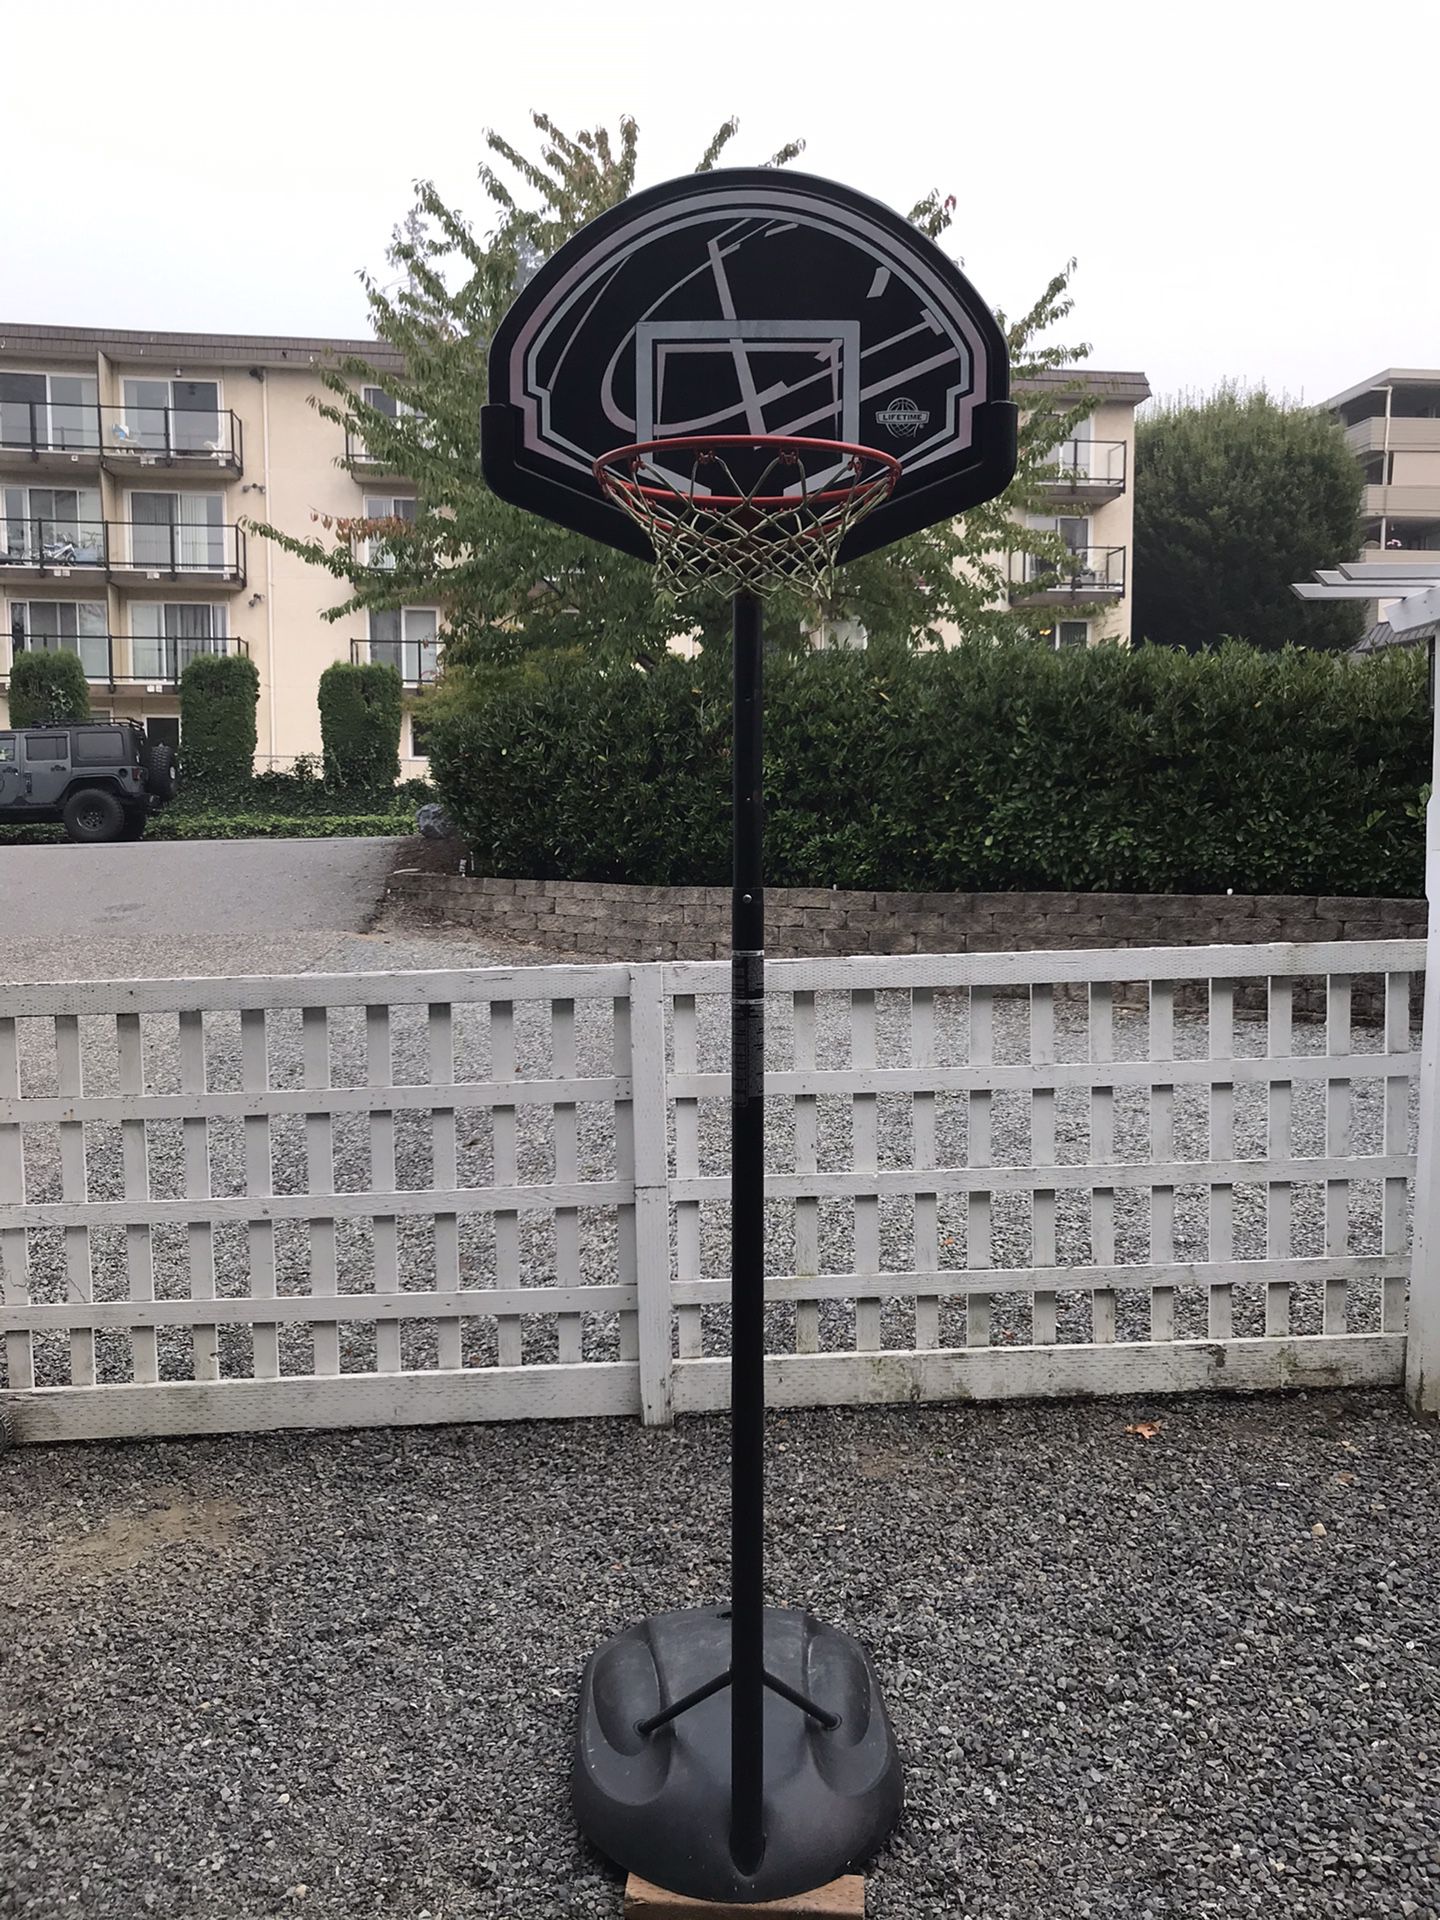 Small basketball hoop